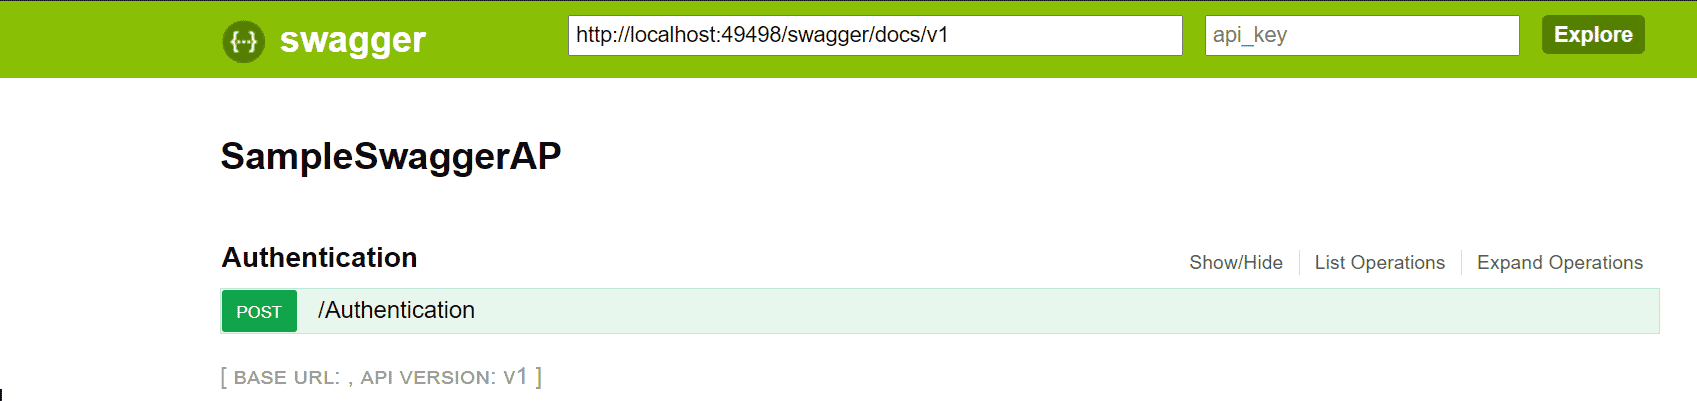 Swagger API Example